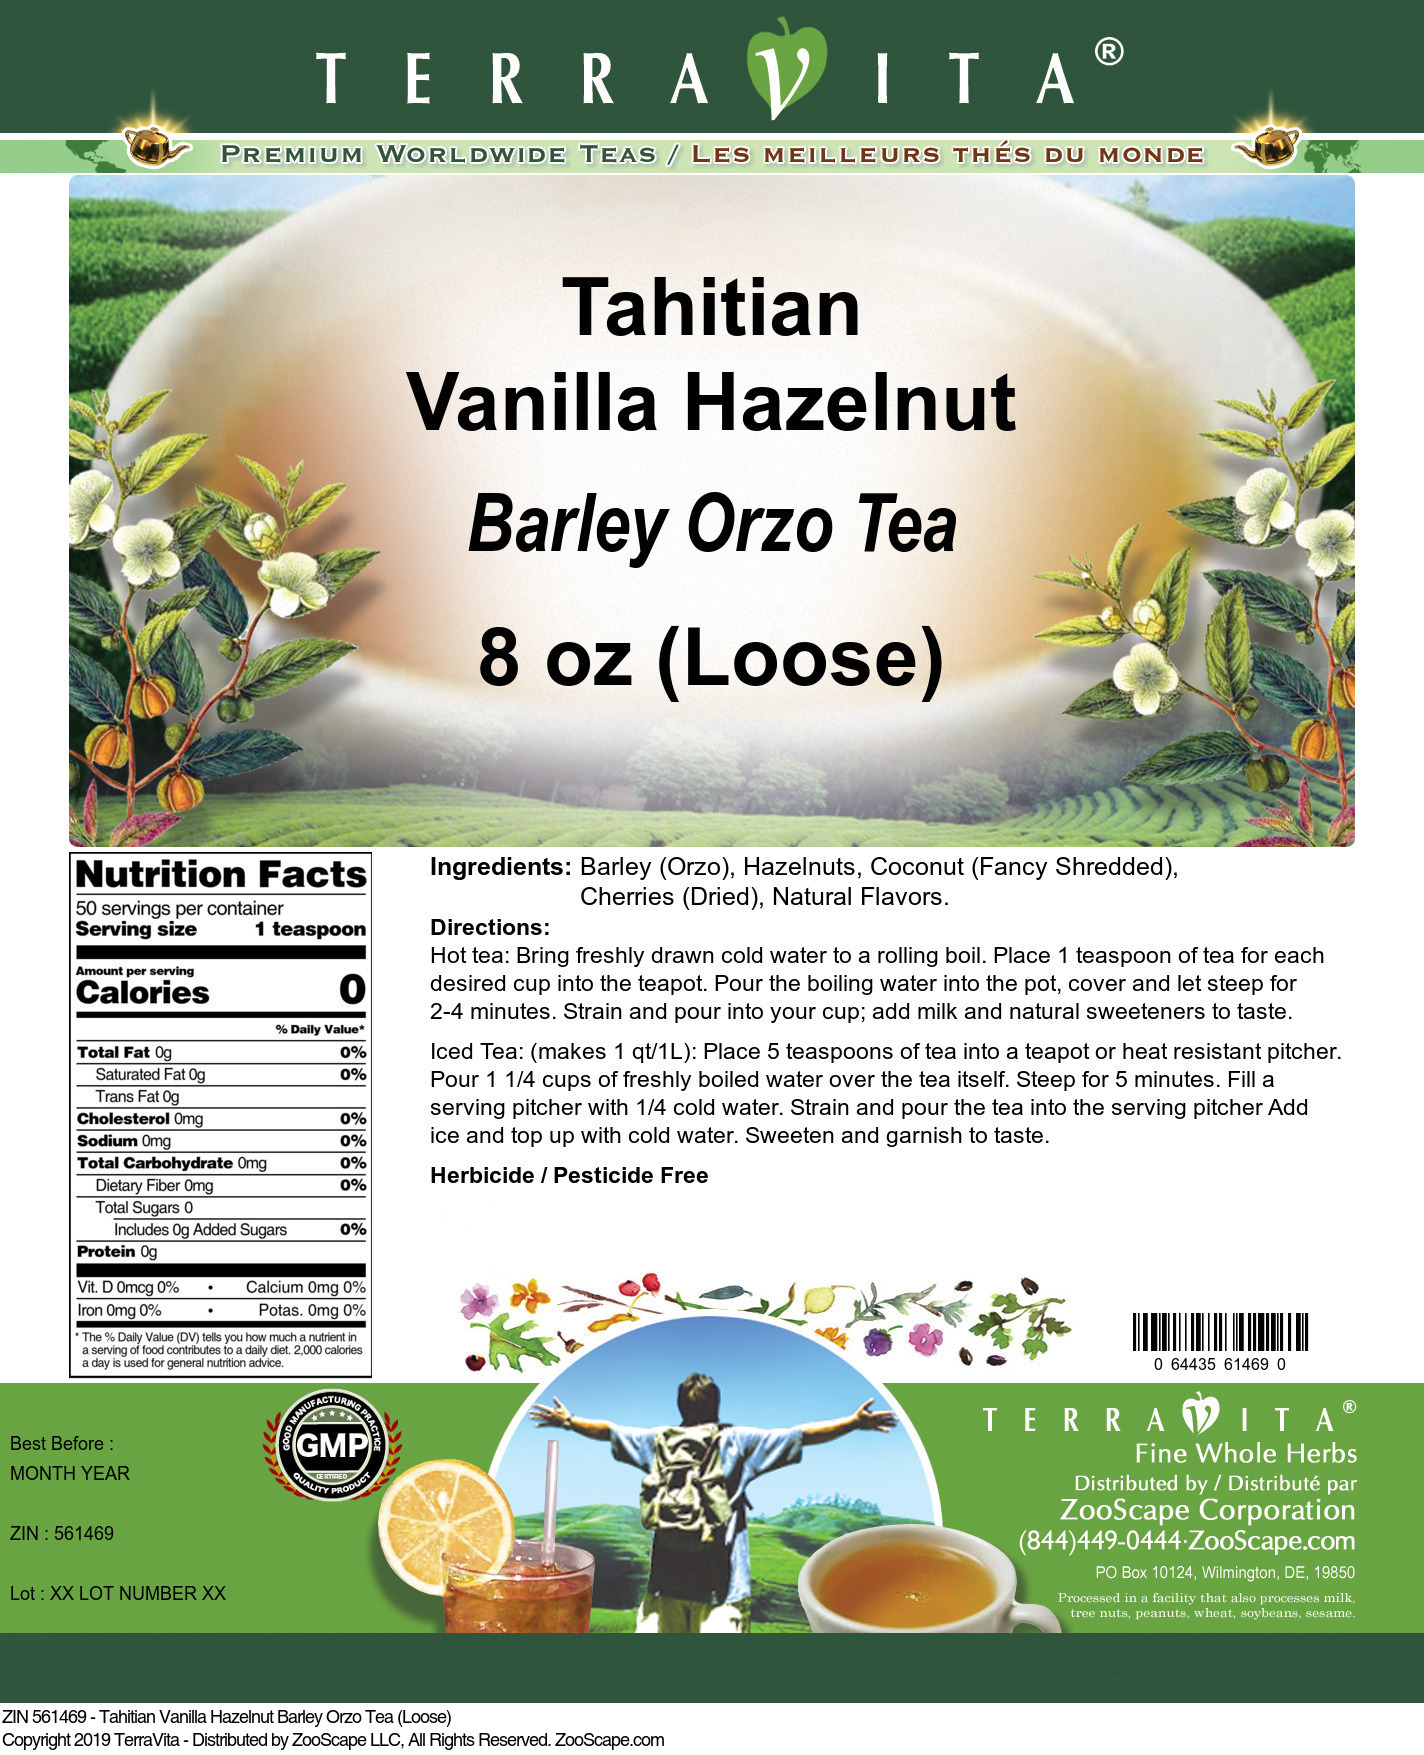 Tahitian Vanilla Hazelnut Barley Orzo Tea (Loose) - Label